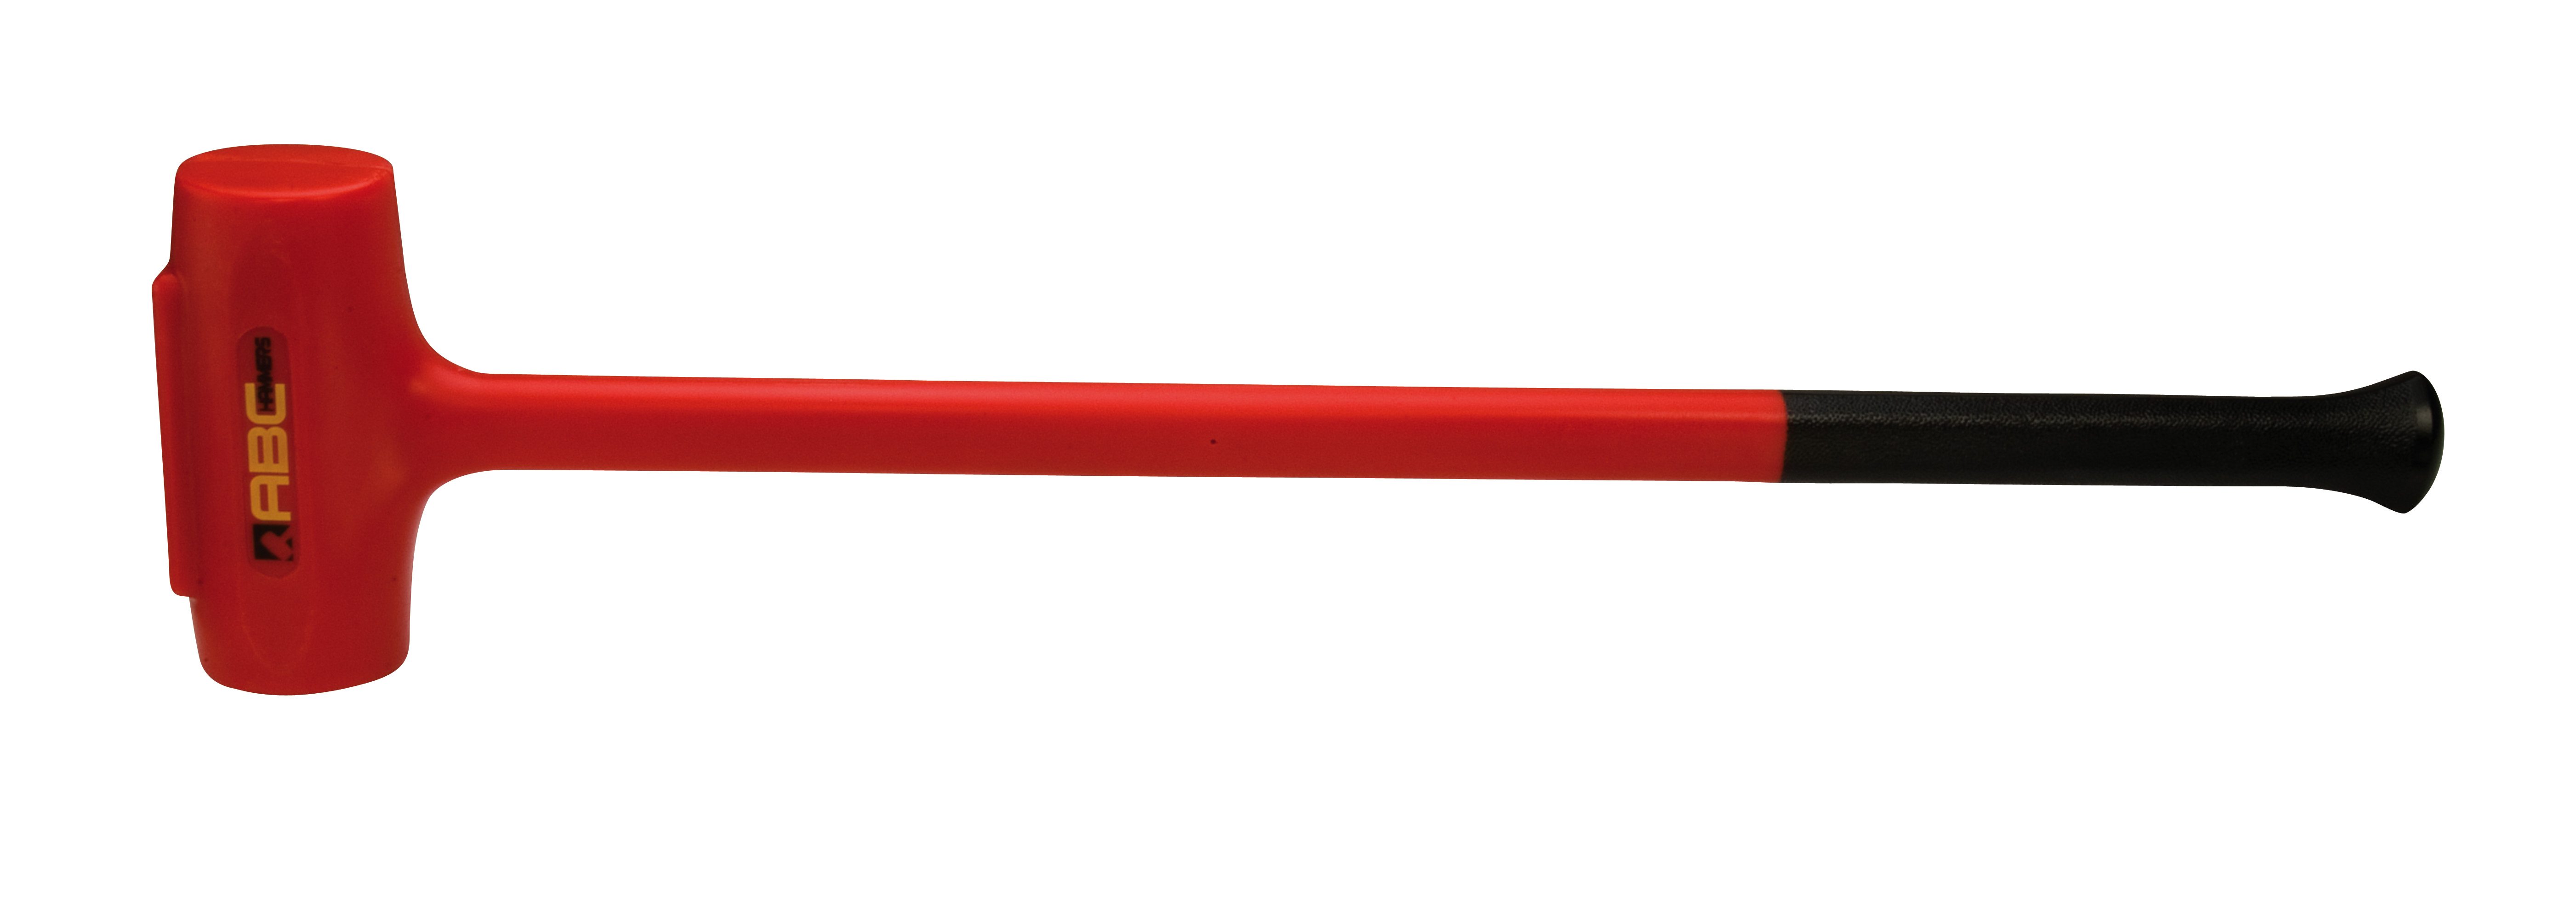 12 lb. Polyurethane Dead Blow Hammer - Overall Length 36.00"